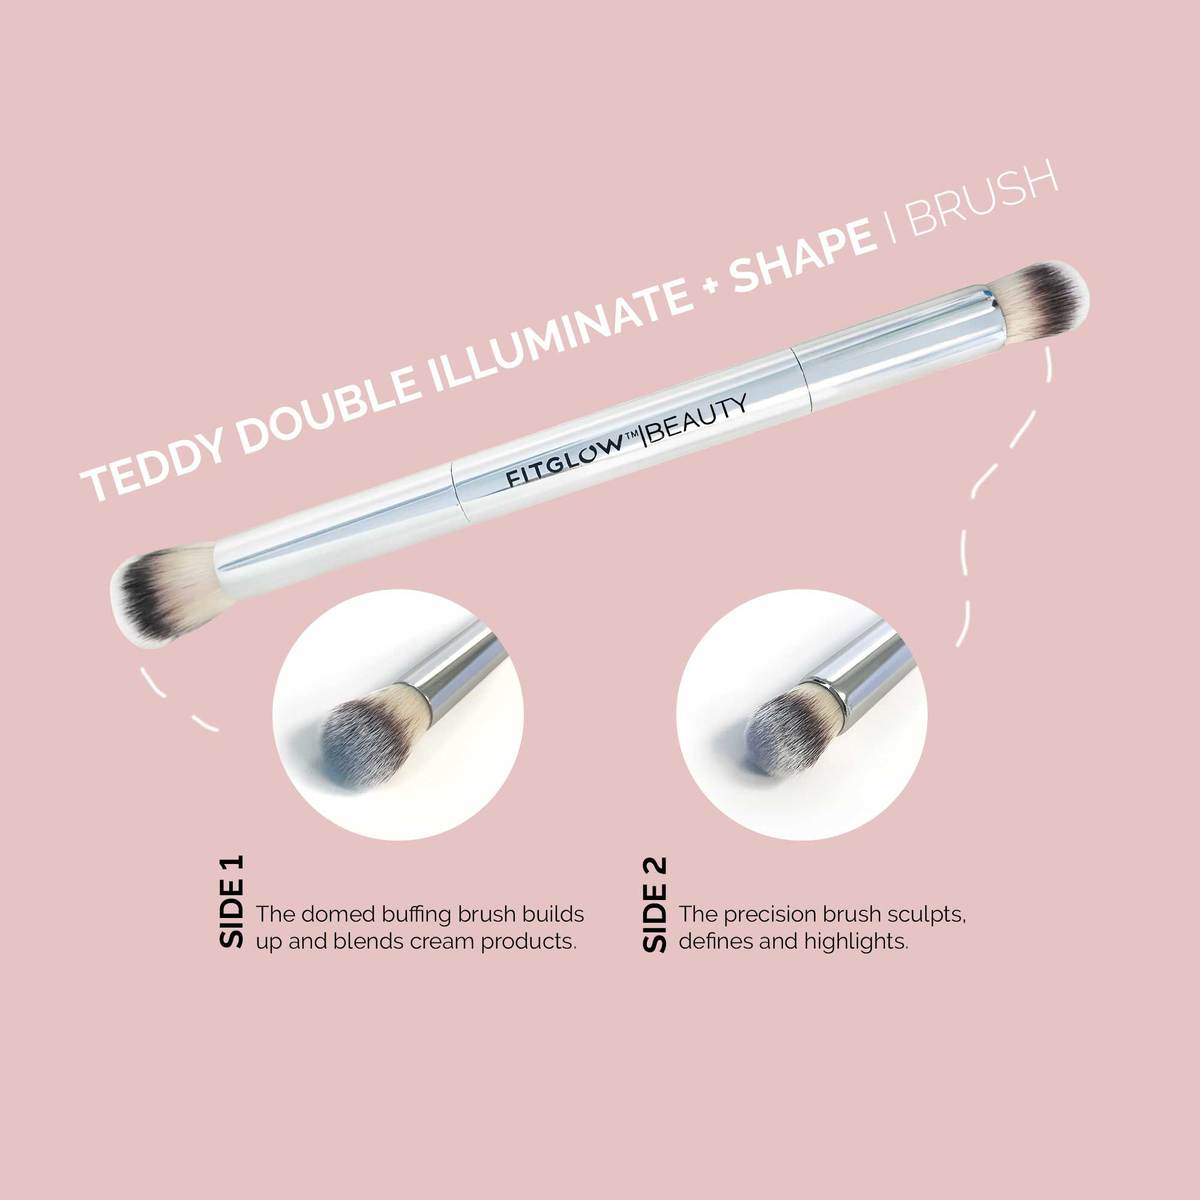 Vegan Teddy Double Illuminate + Shape Brush (4927272616007)